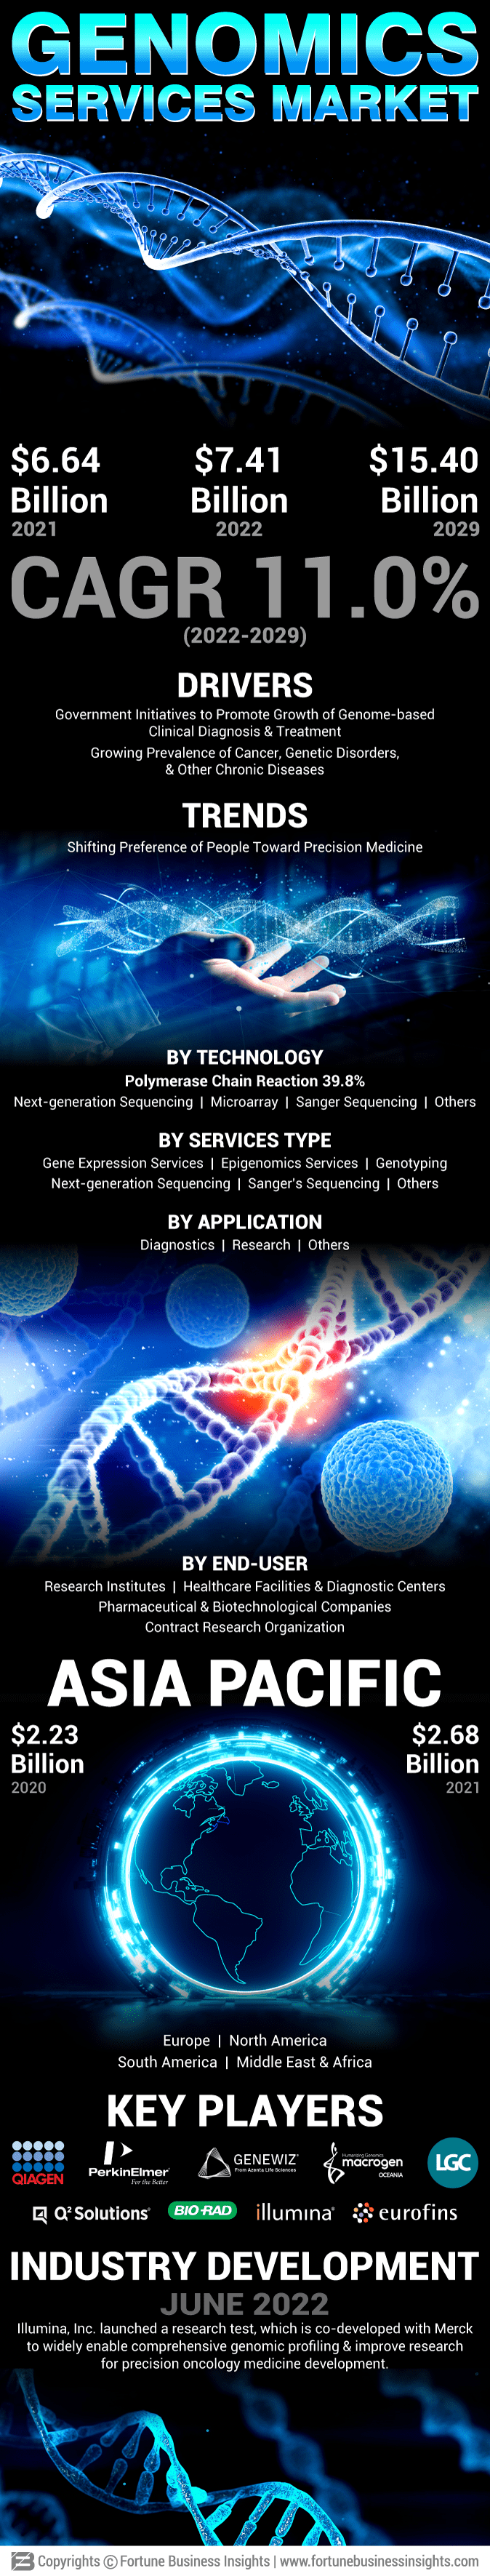 Genomics Services Market